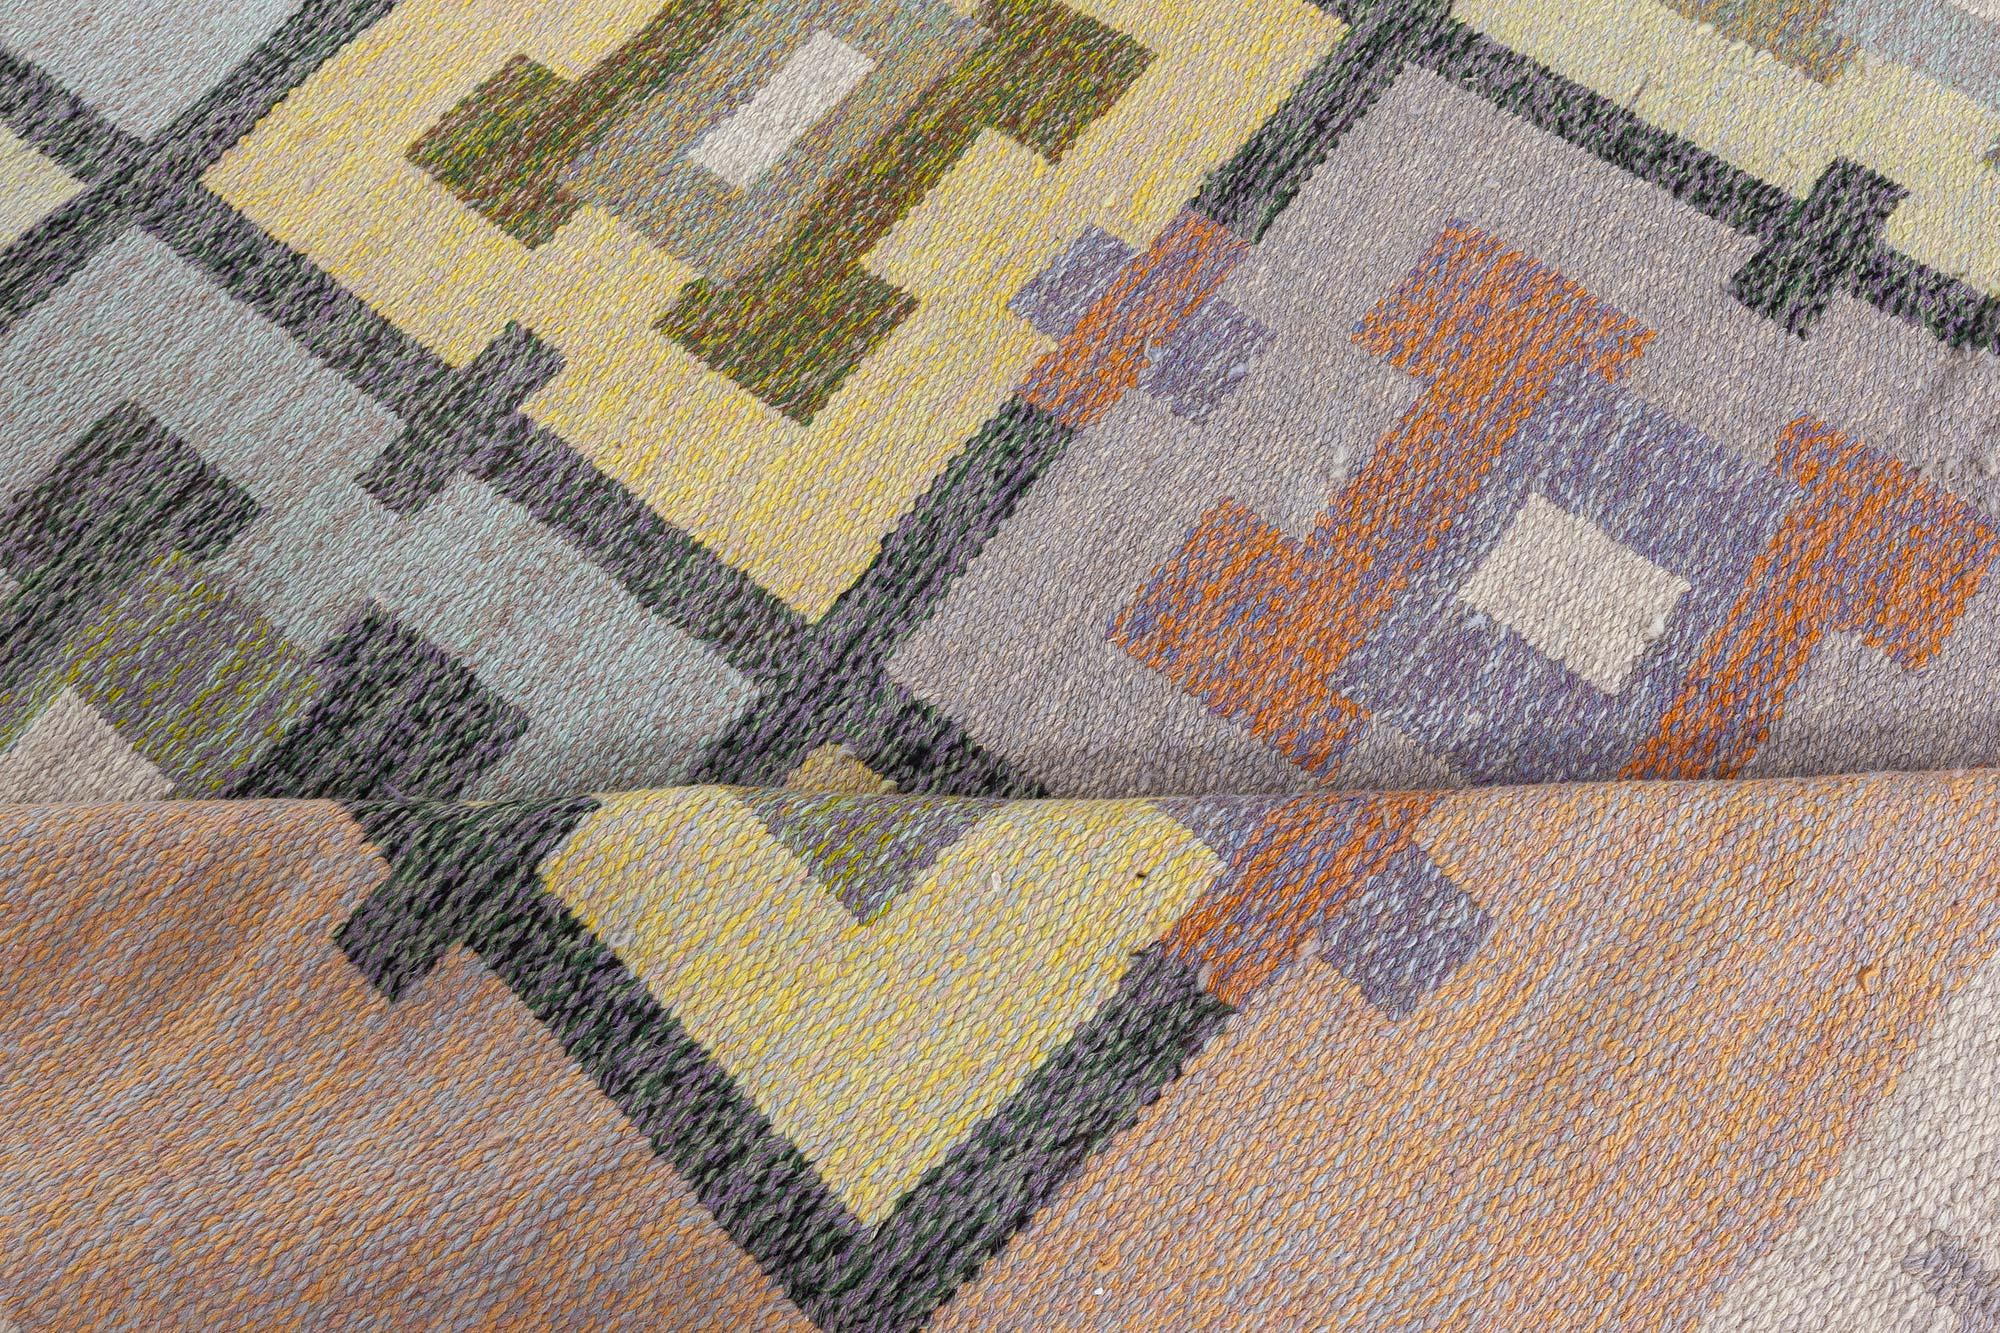 Vintage Swedish Flat Weave rug by Agda Osterberg
Size: 6'5